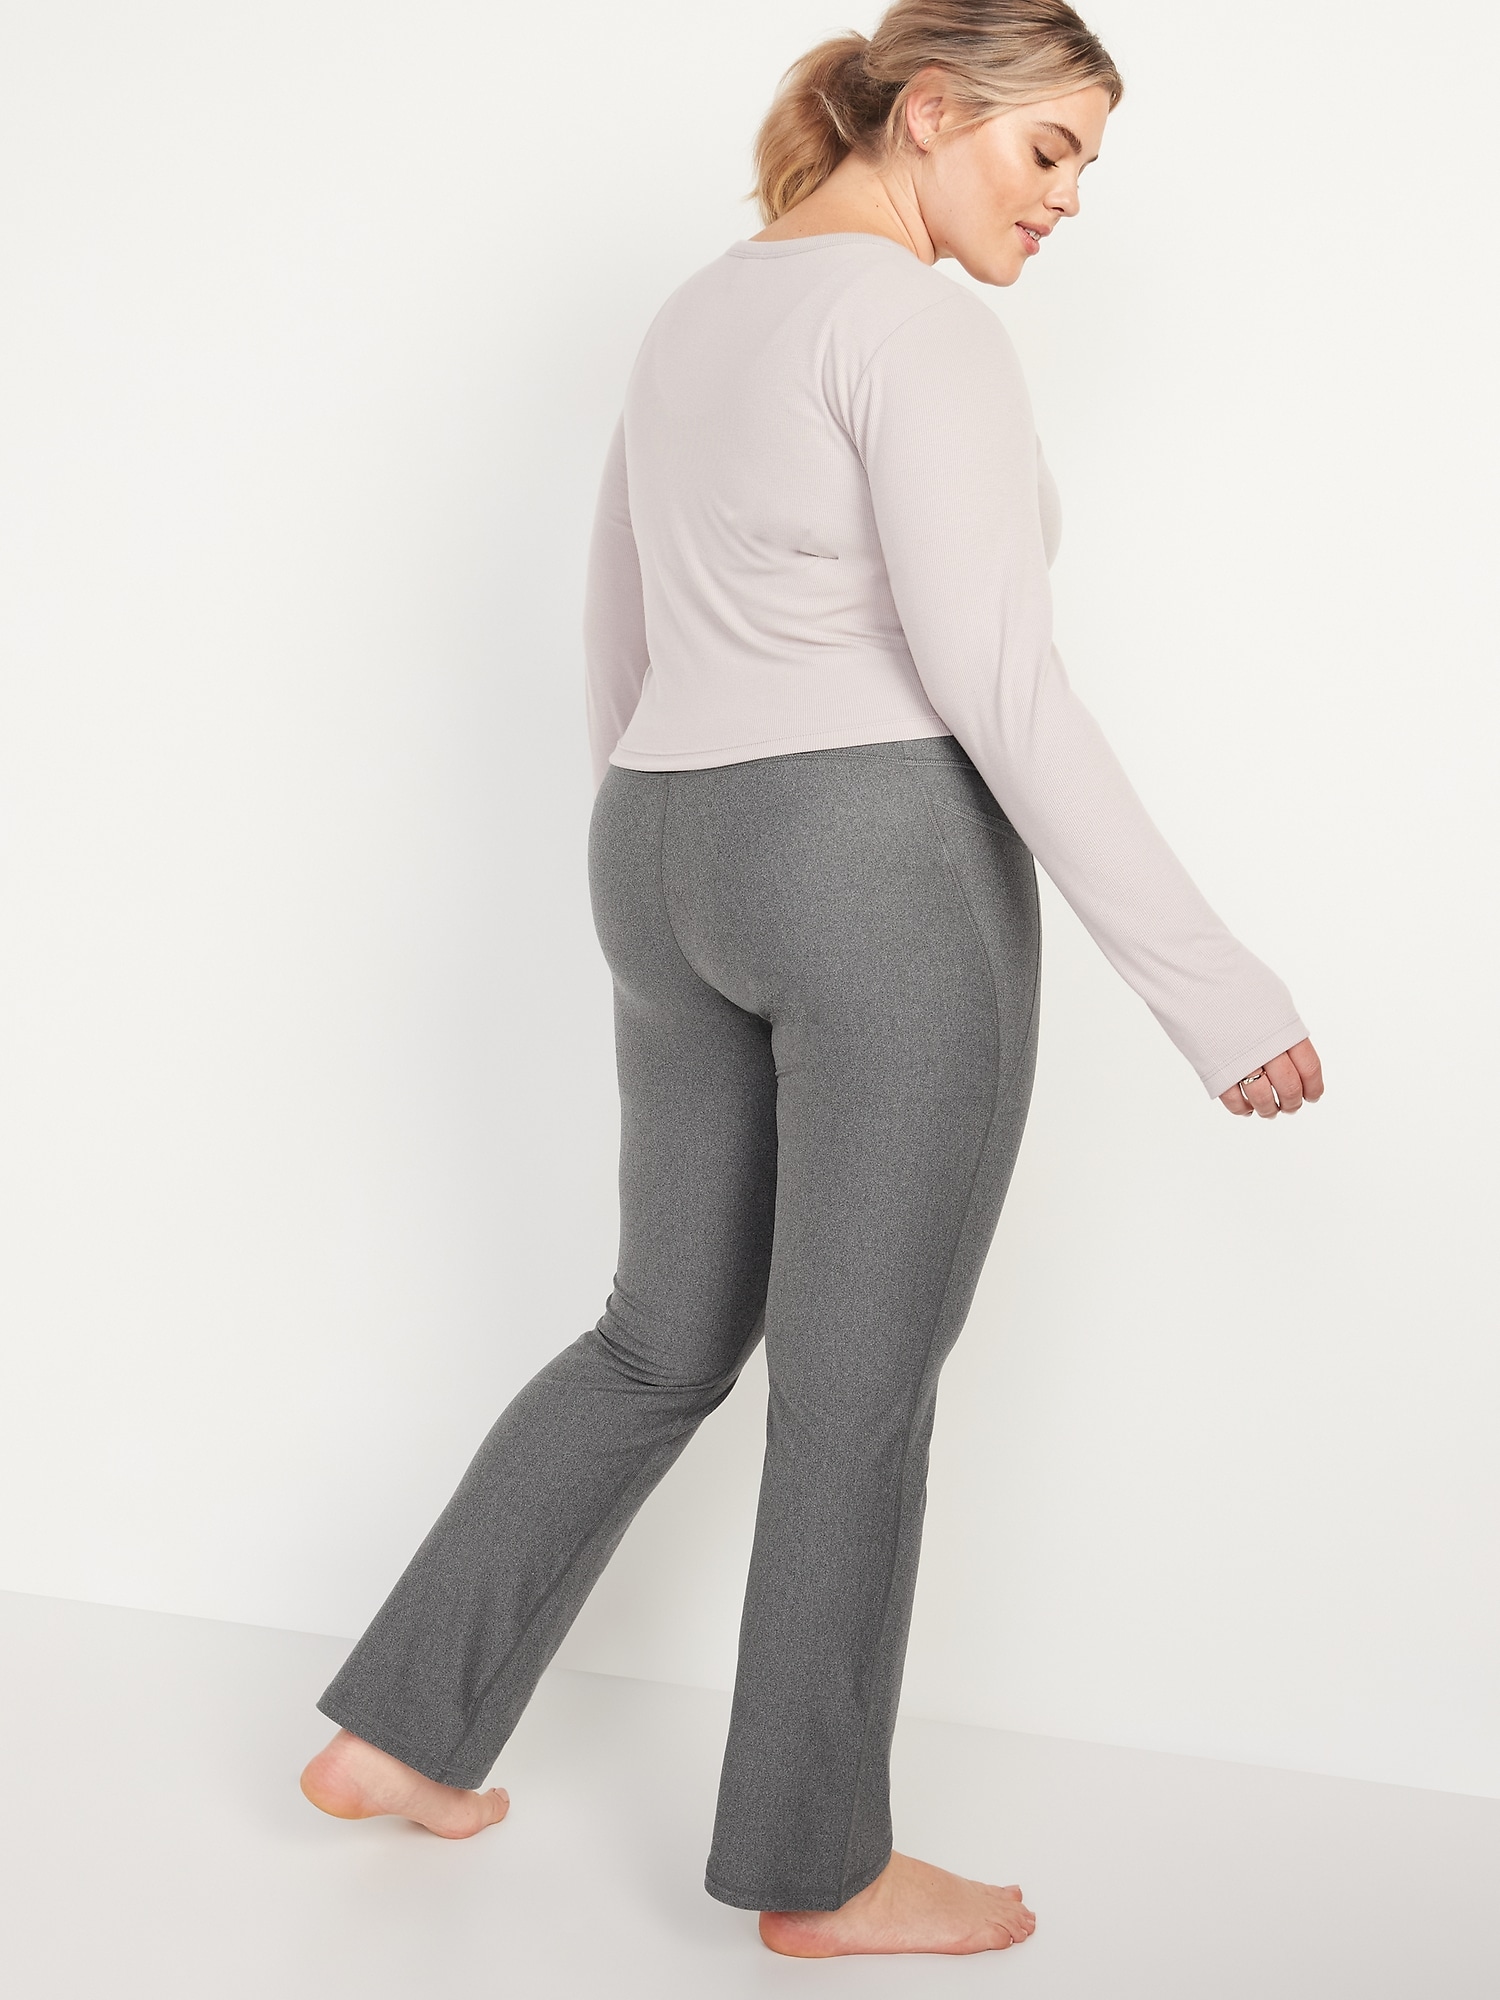 KINPLE Women Bootcut Yoga Pants with Pockets Flared Leggings High